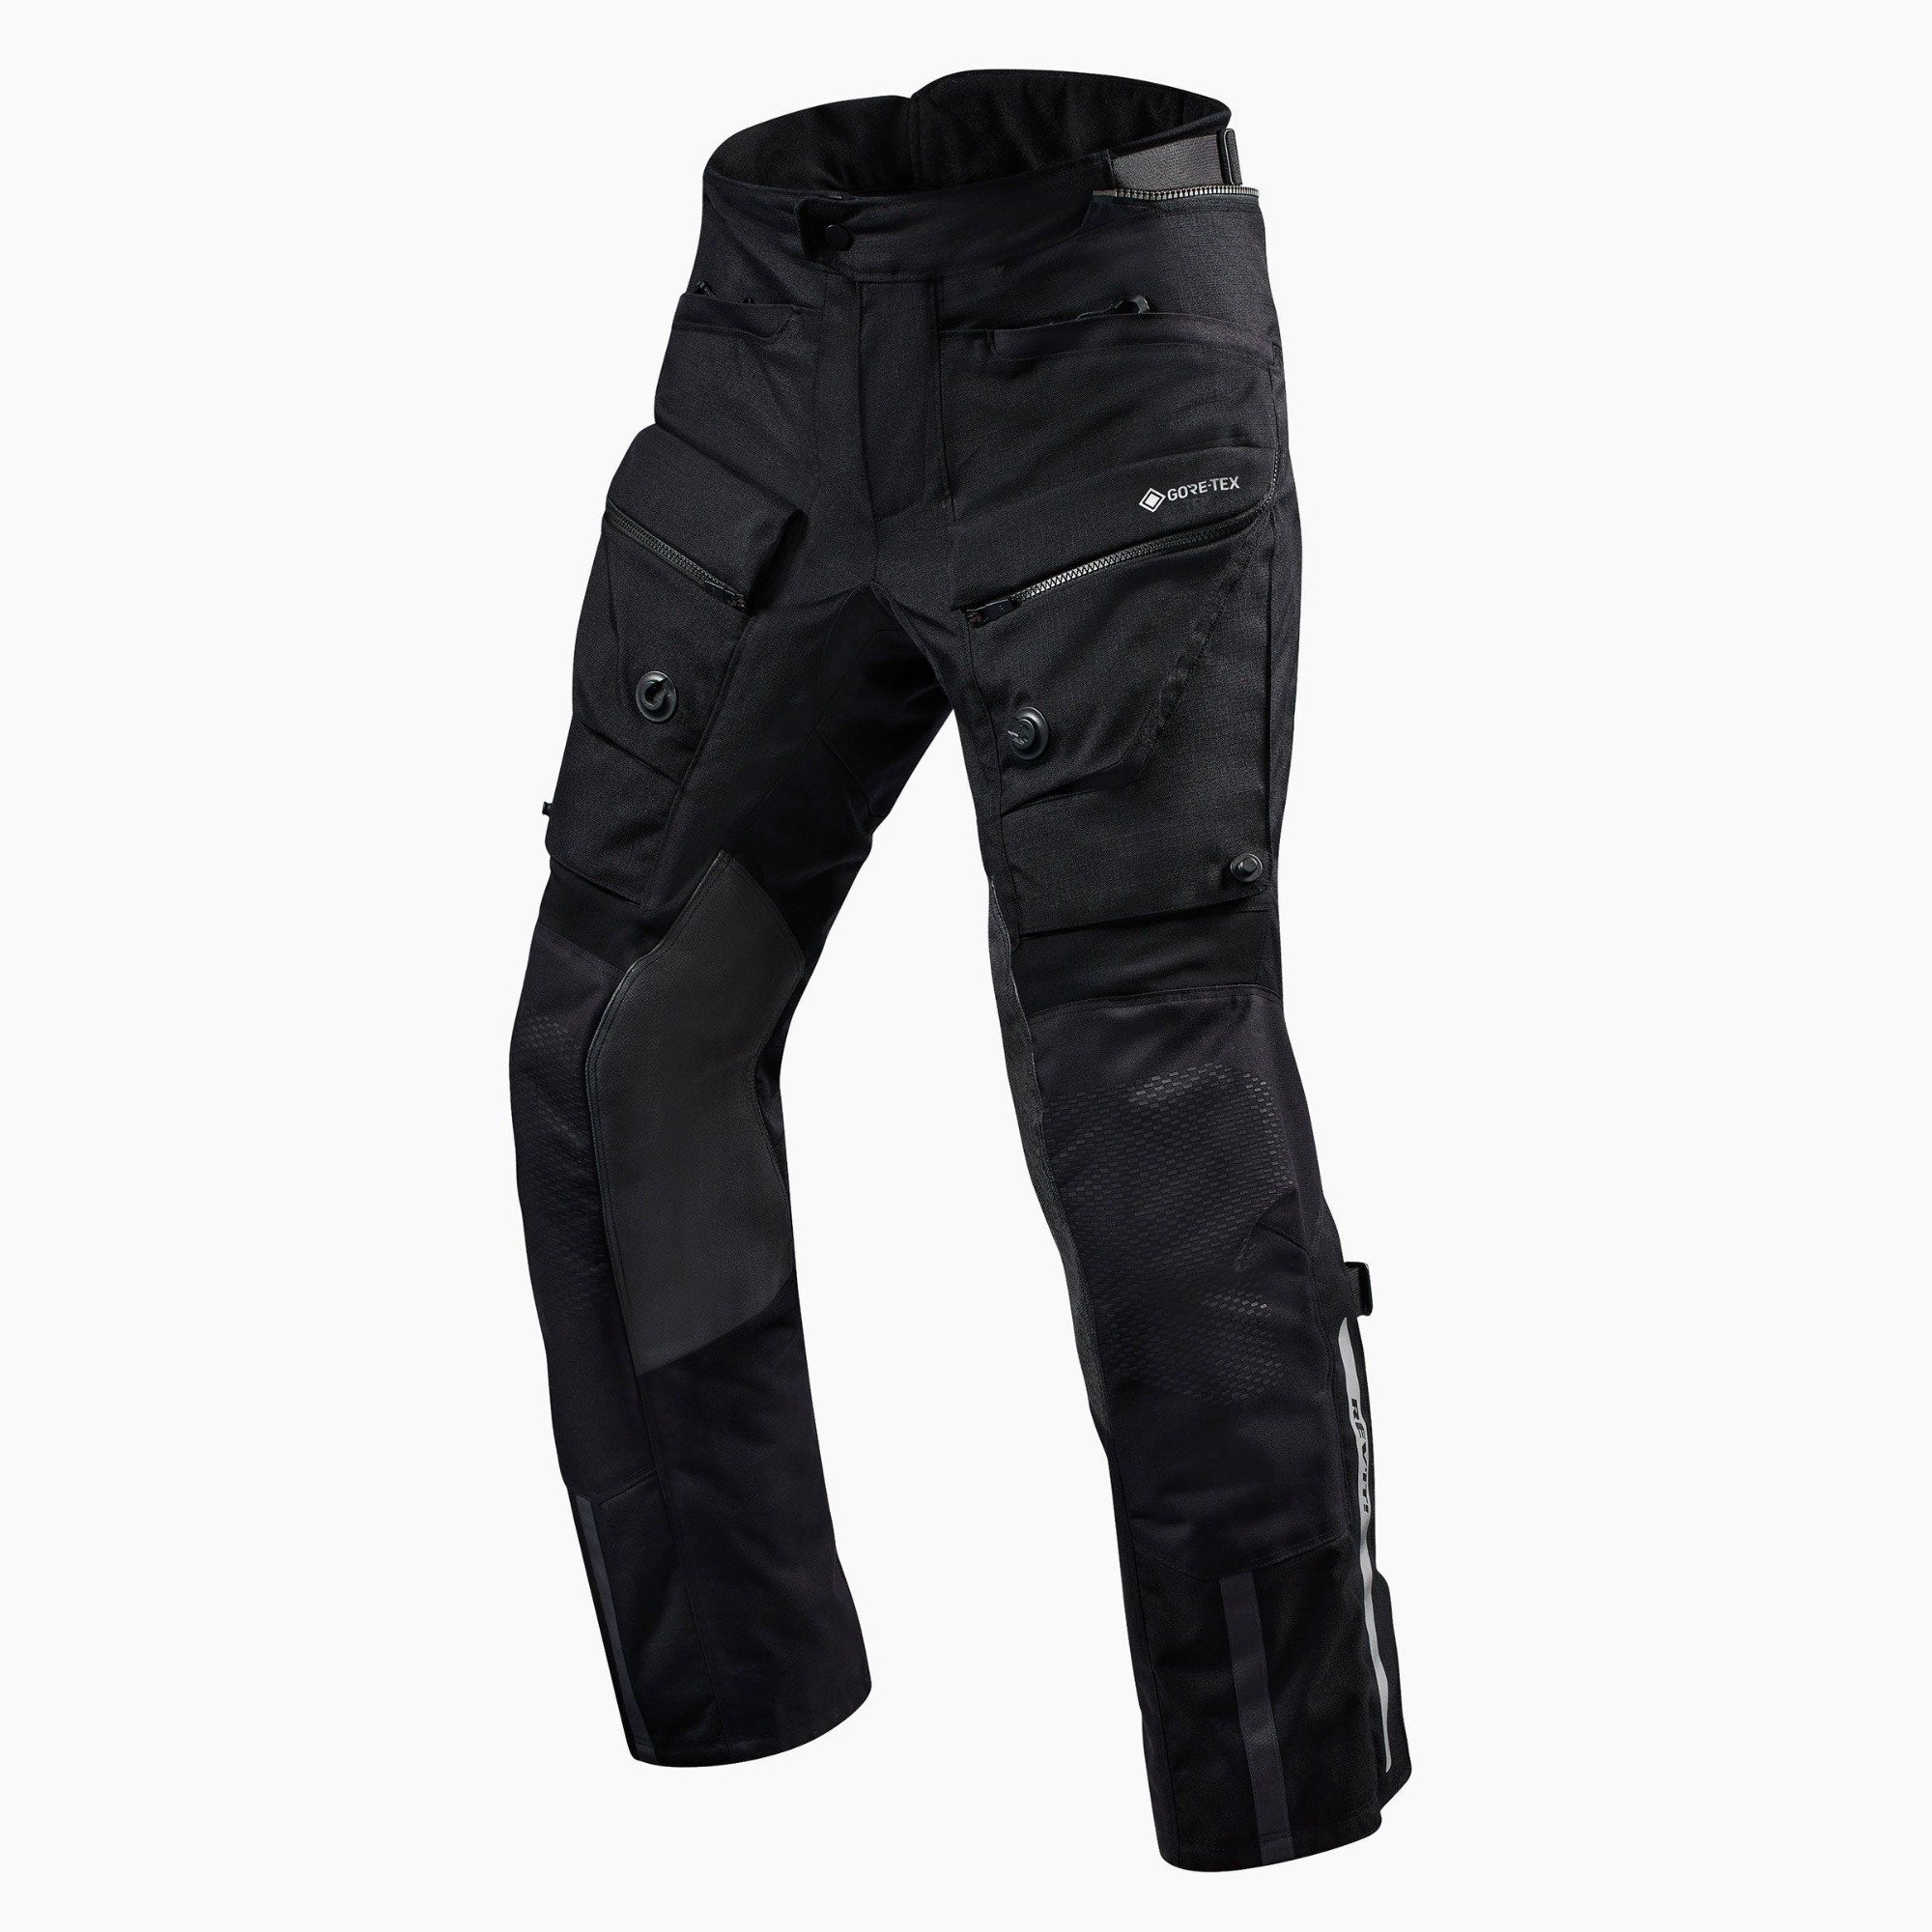 Image of REV'IT! Trousers Defender 3 GTX Black Short Motorcycle Pants Size L EN